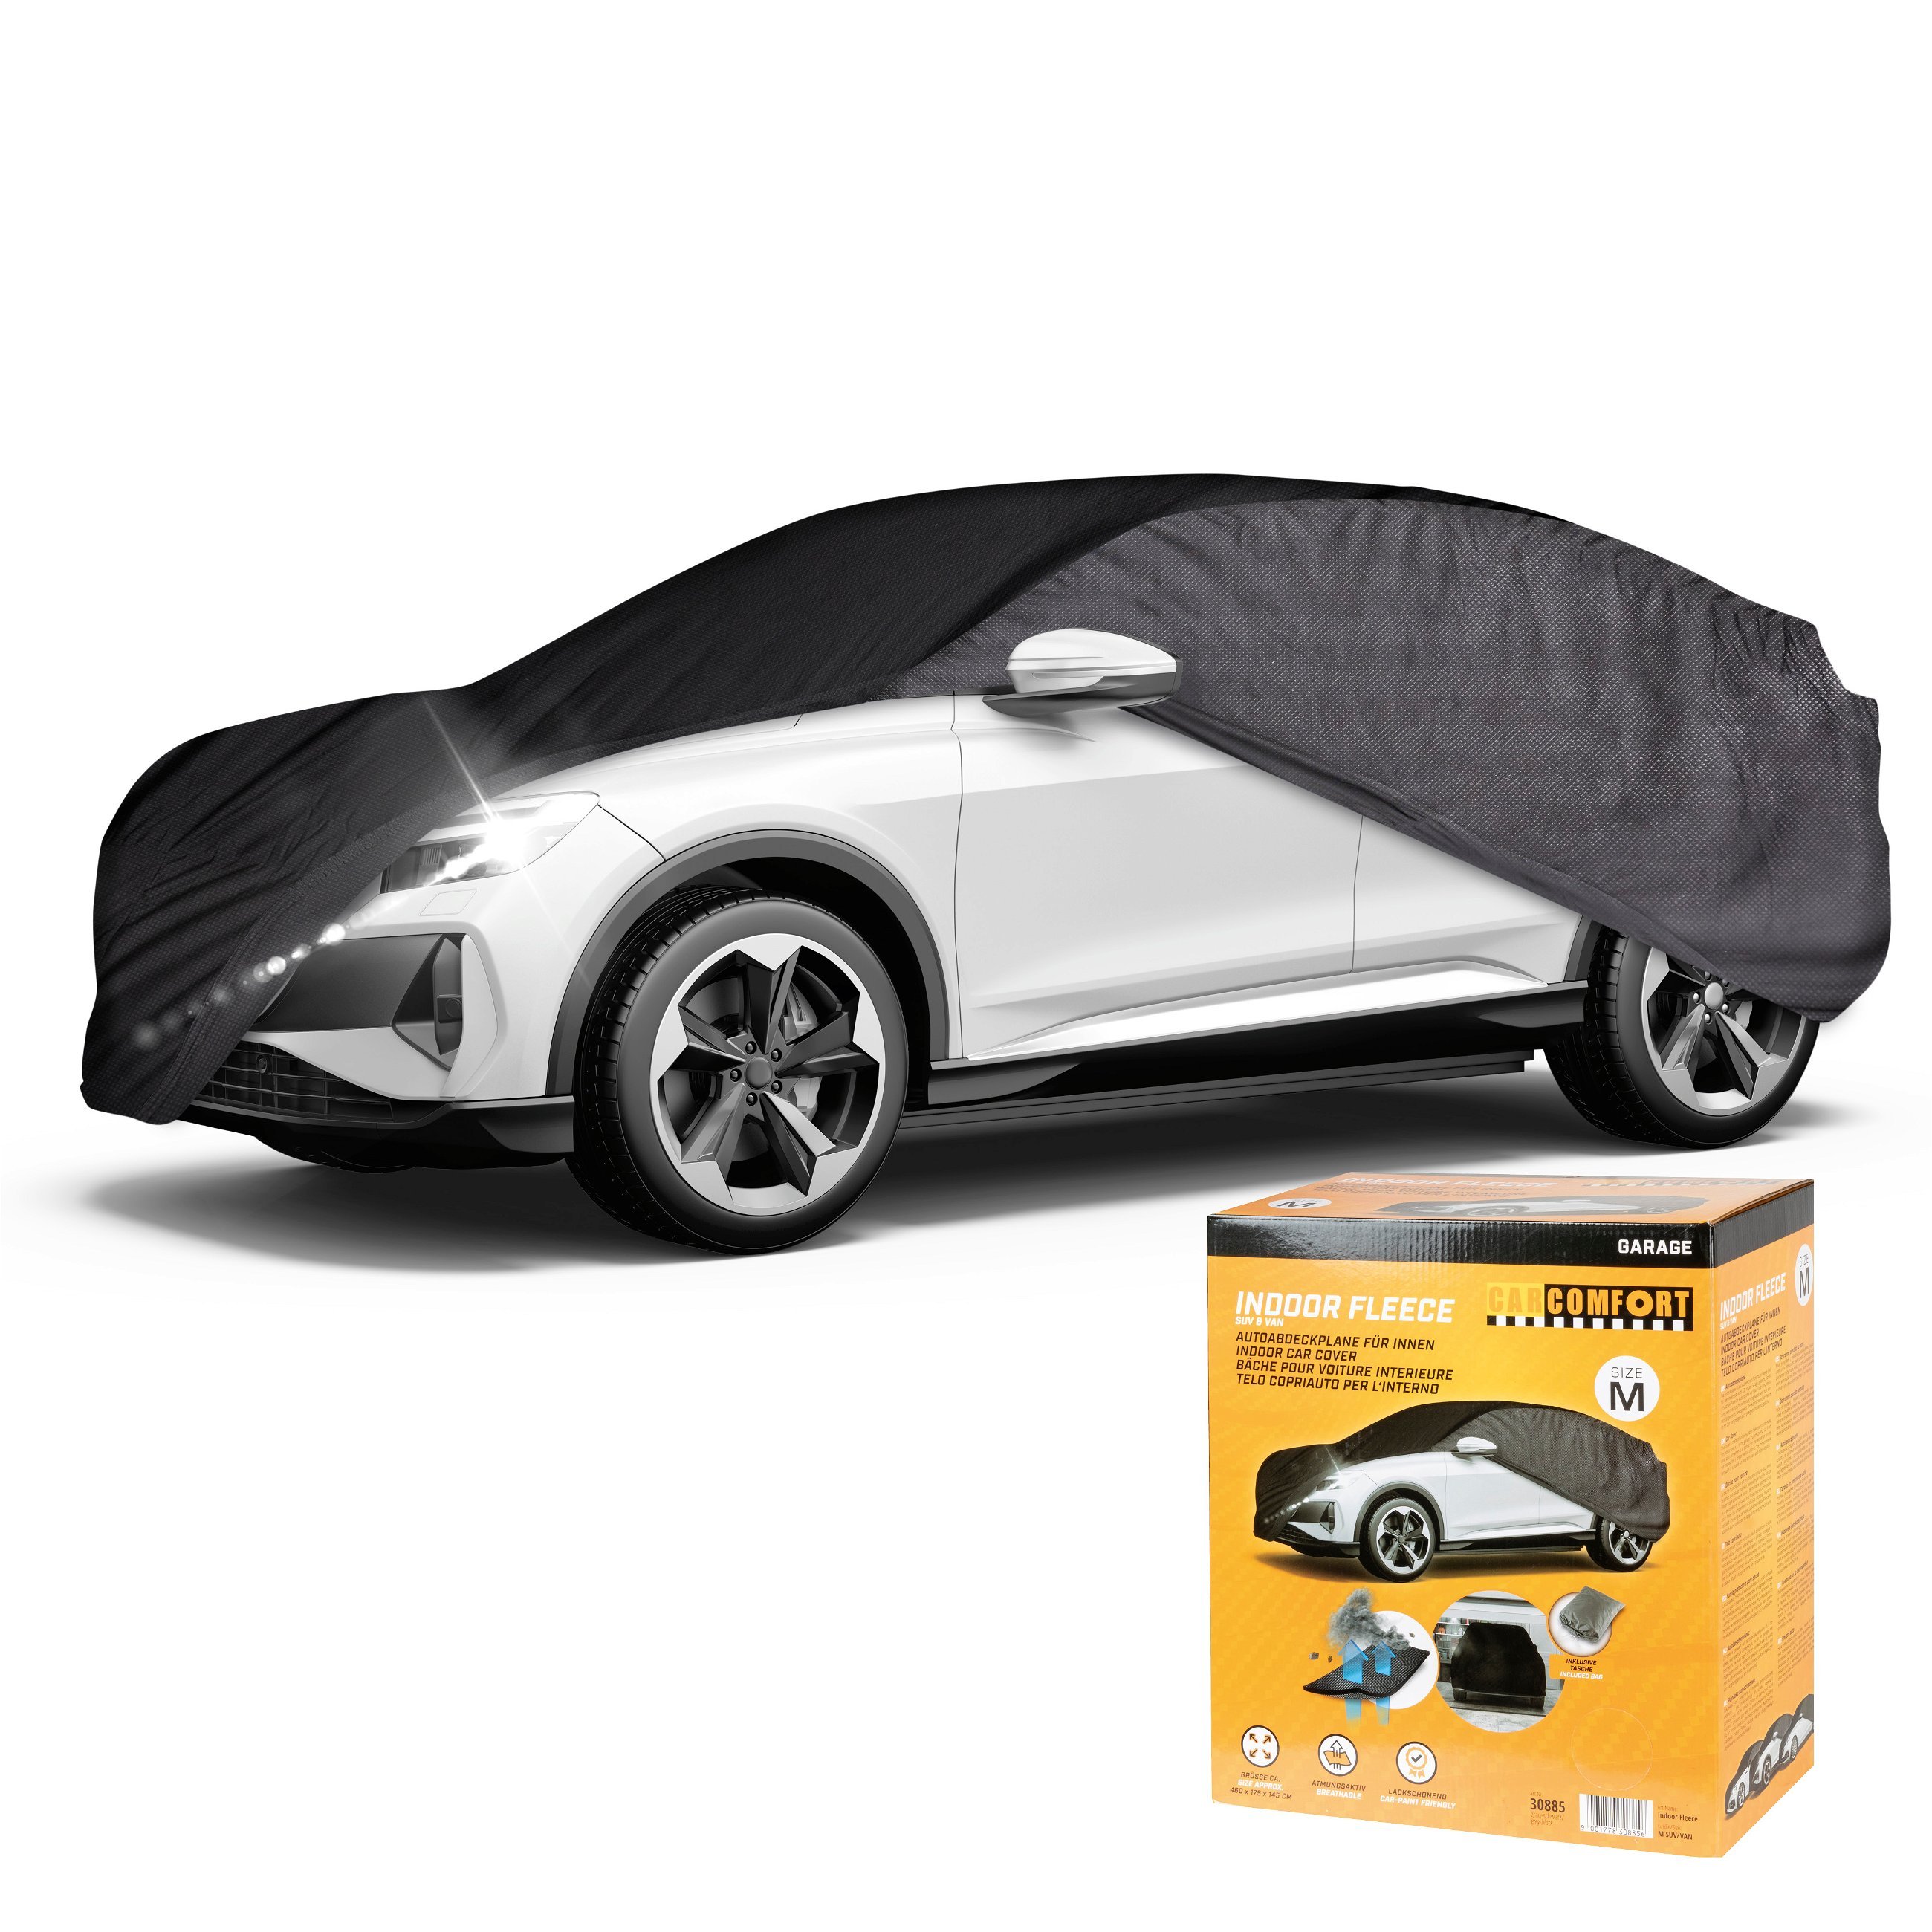 Car tarpaulin Indoor Fleece SUV size M grey/black